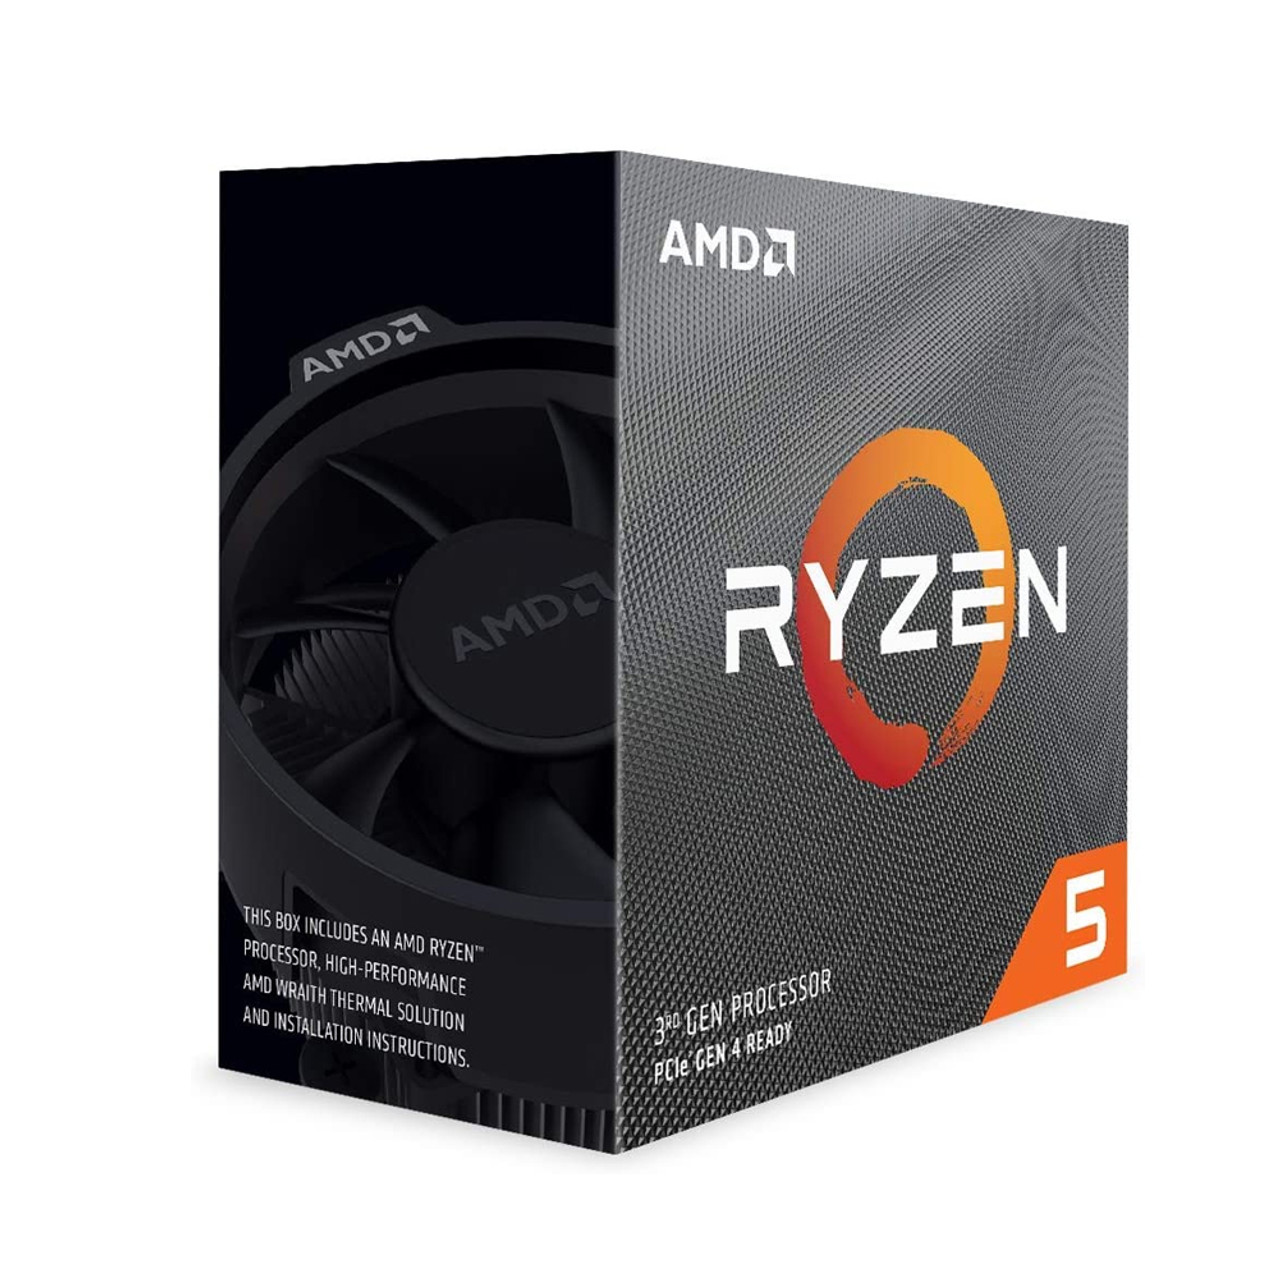 AMD Ryzen 5 3600 3.6 GHz (4.2 GHz Max Boost) 6-Core, 12-Thread Unlocked Desktop Processor with Wraith Stealth Cooler 100-100000031BOX 